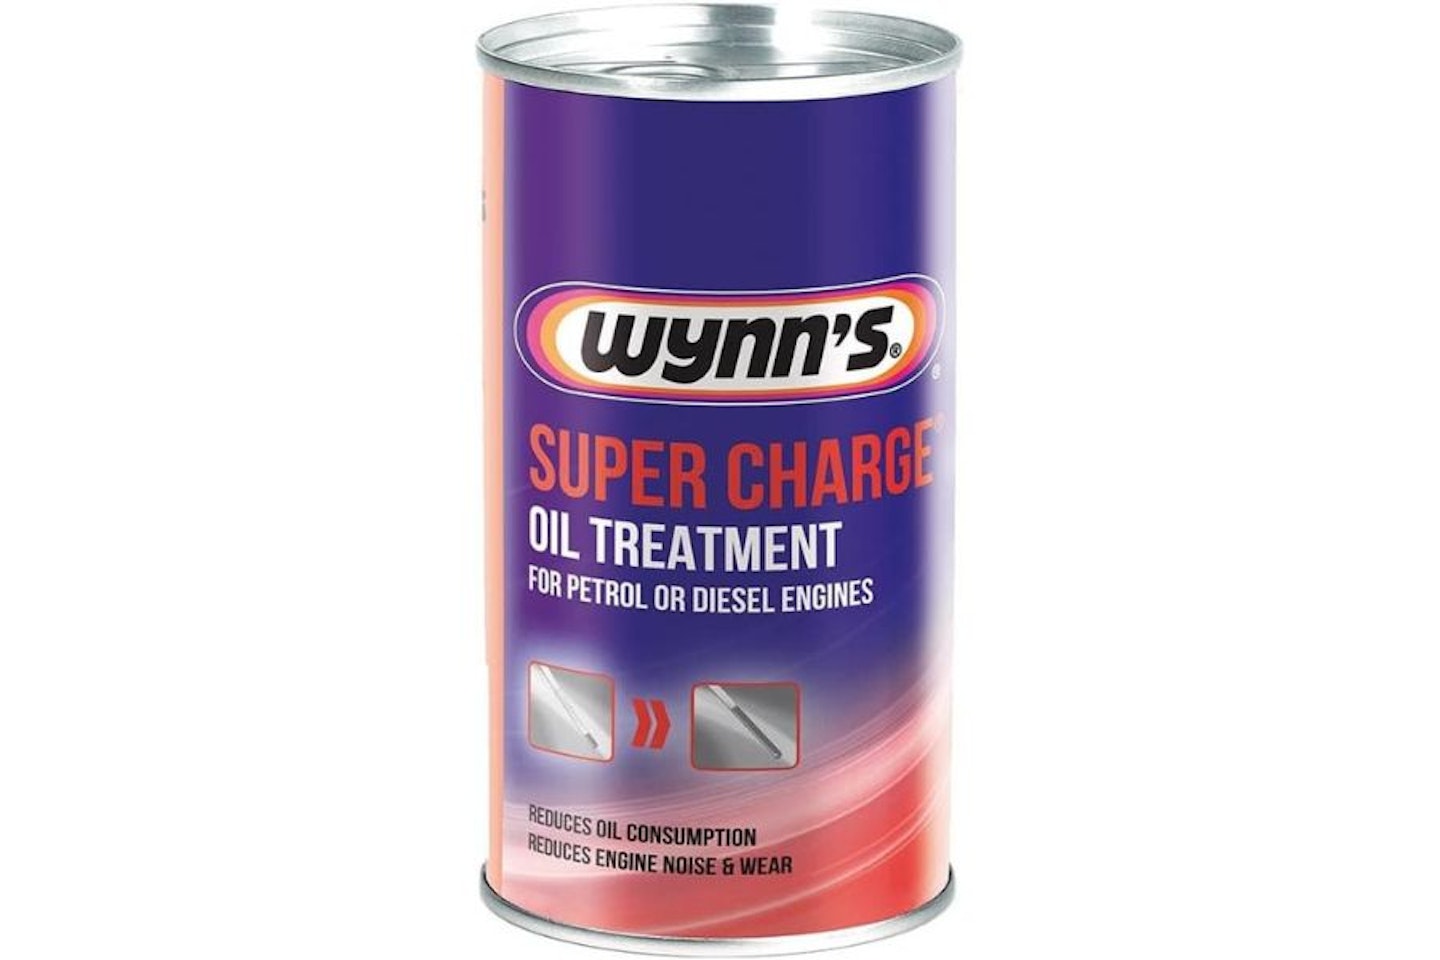 Wynn's Super Charge Oil Treatment